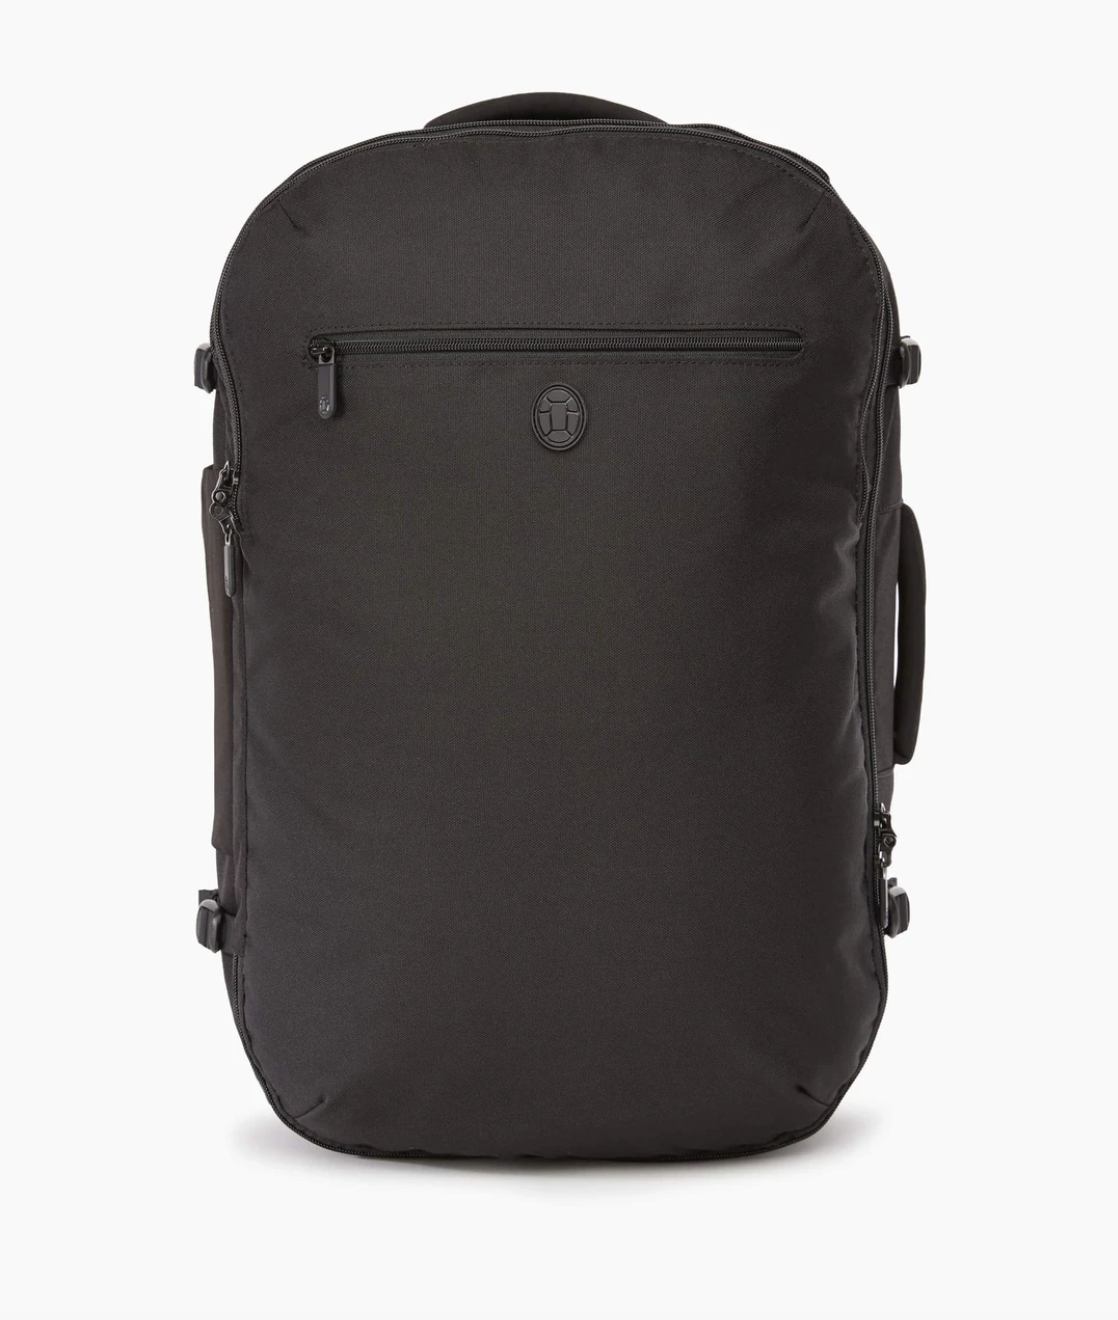 Tortuga Backpack Setout Backpack - Reistas - 35 Liter